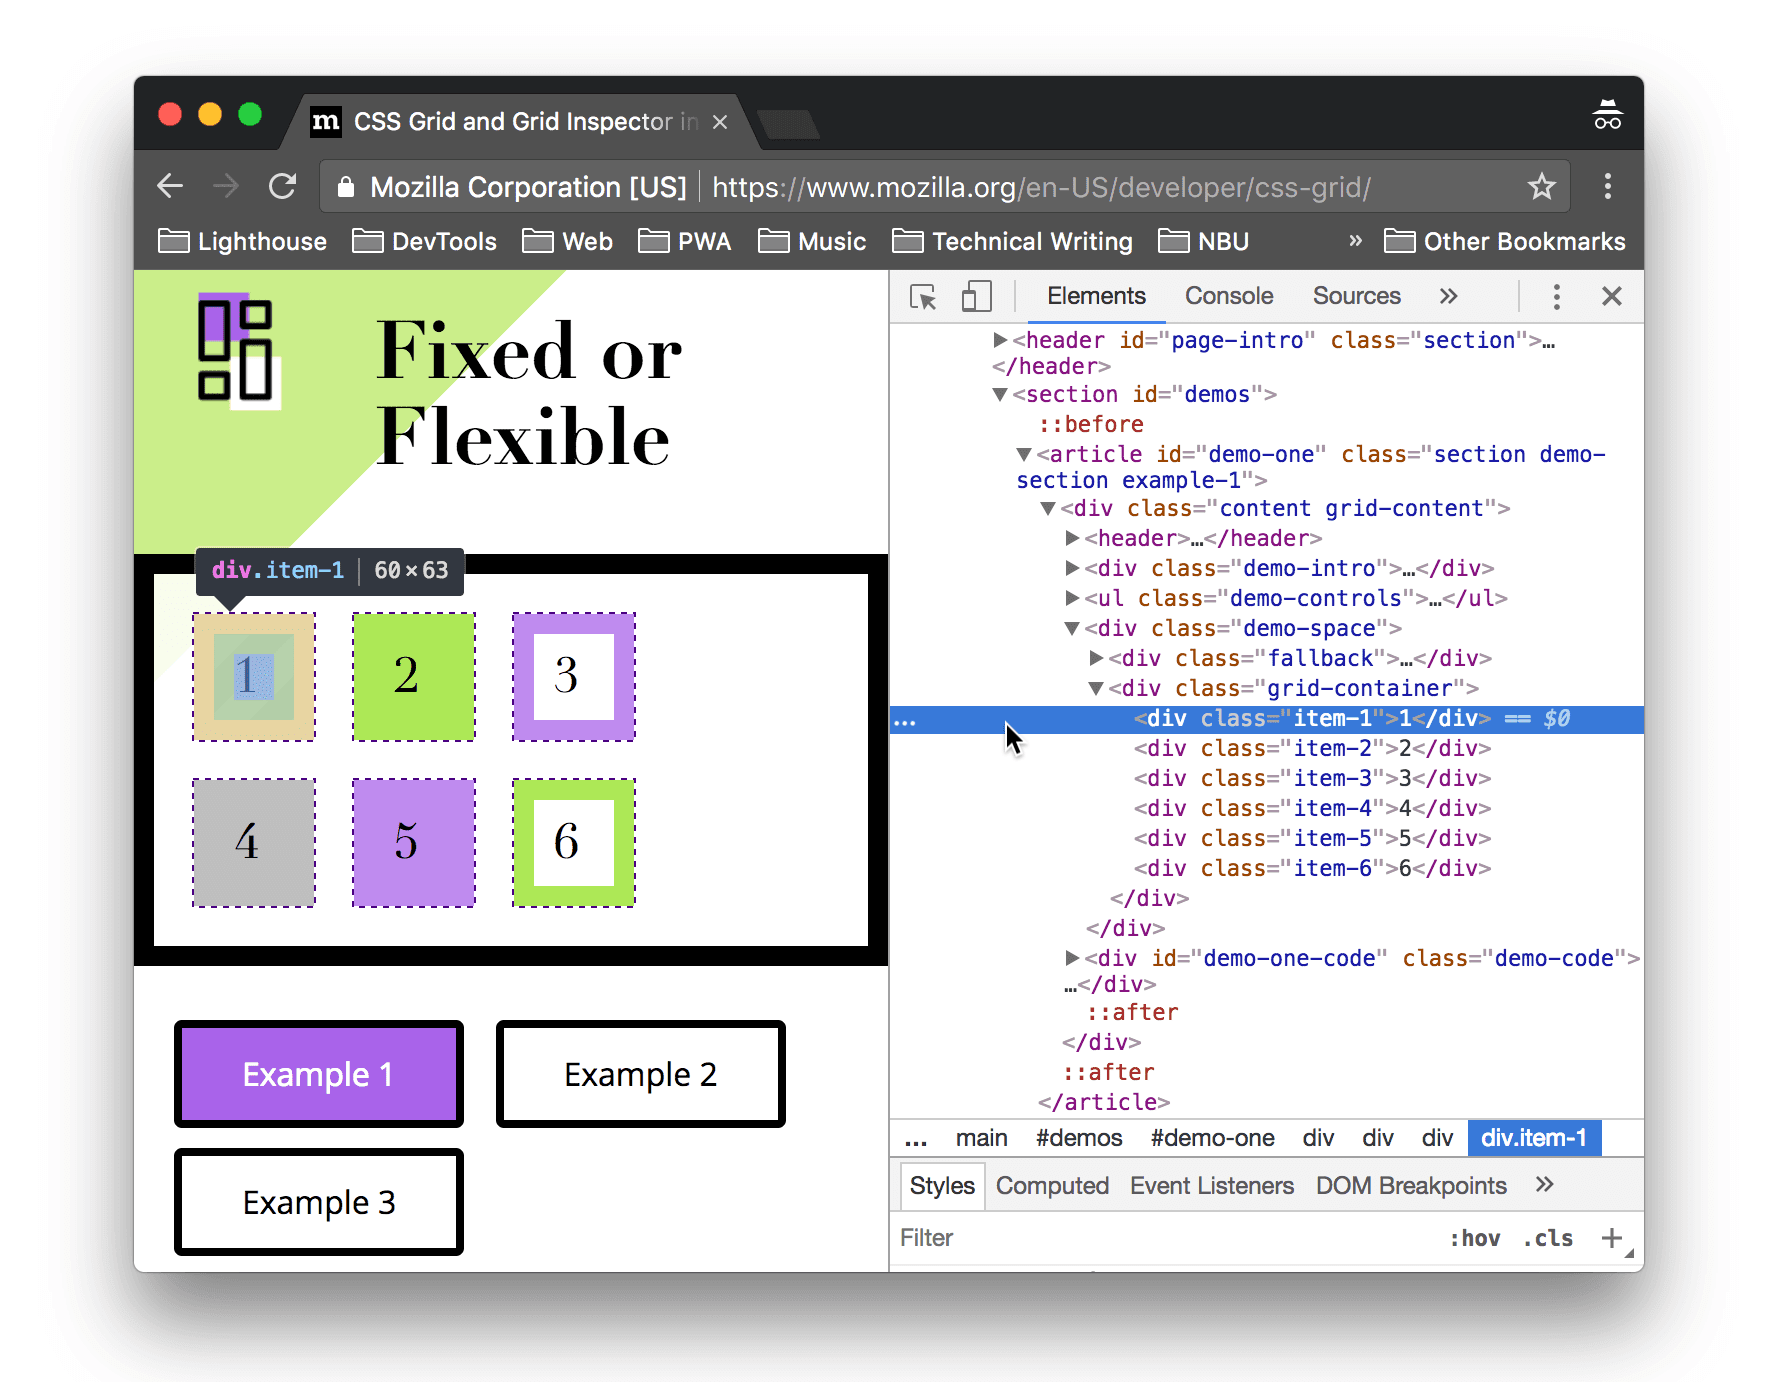 Highlighting a CSS Grid